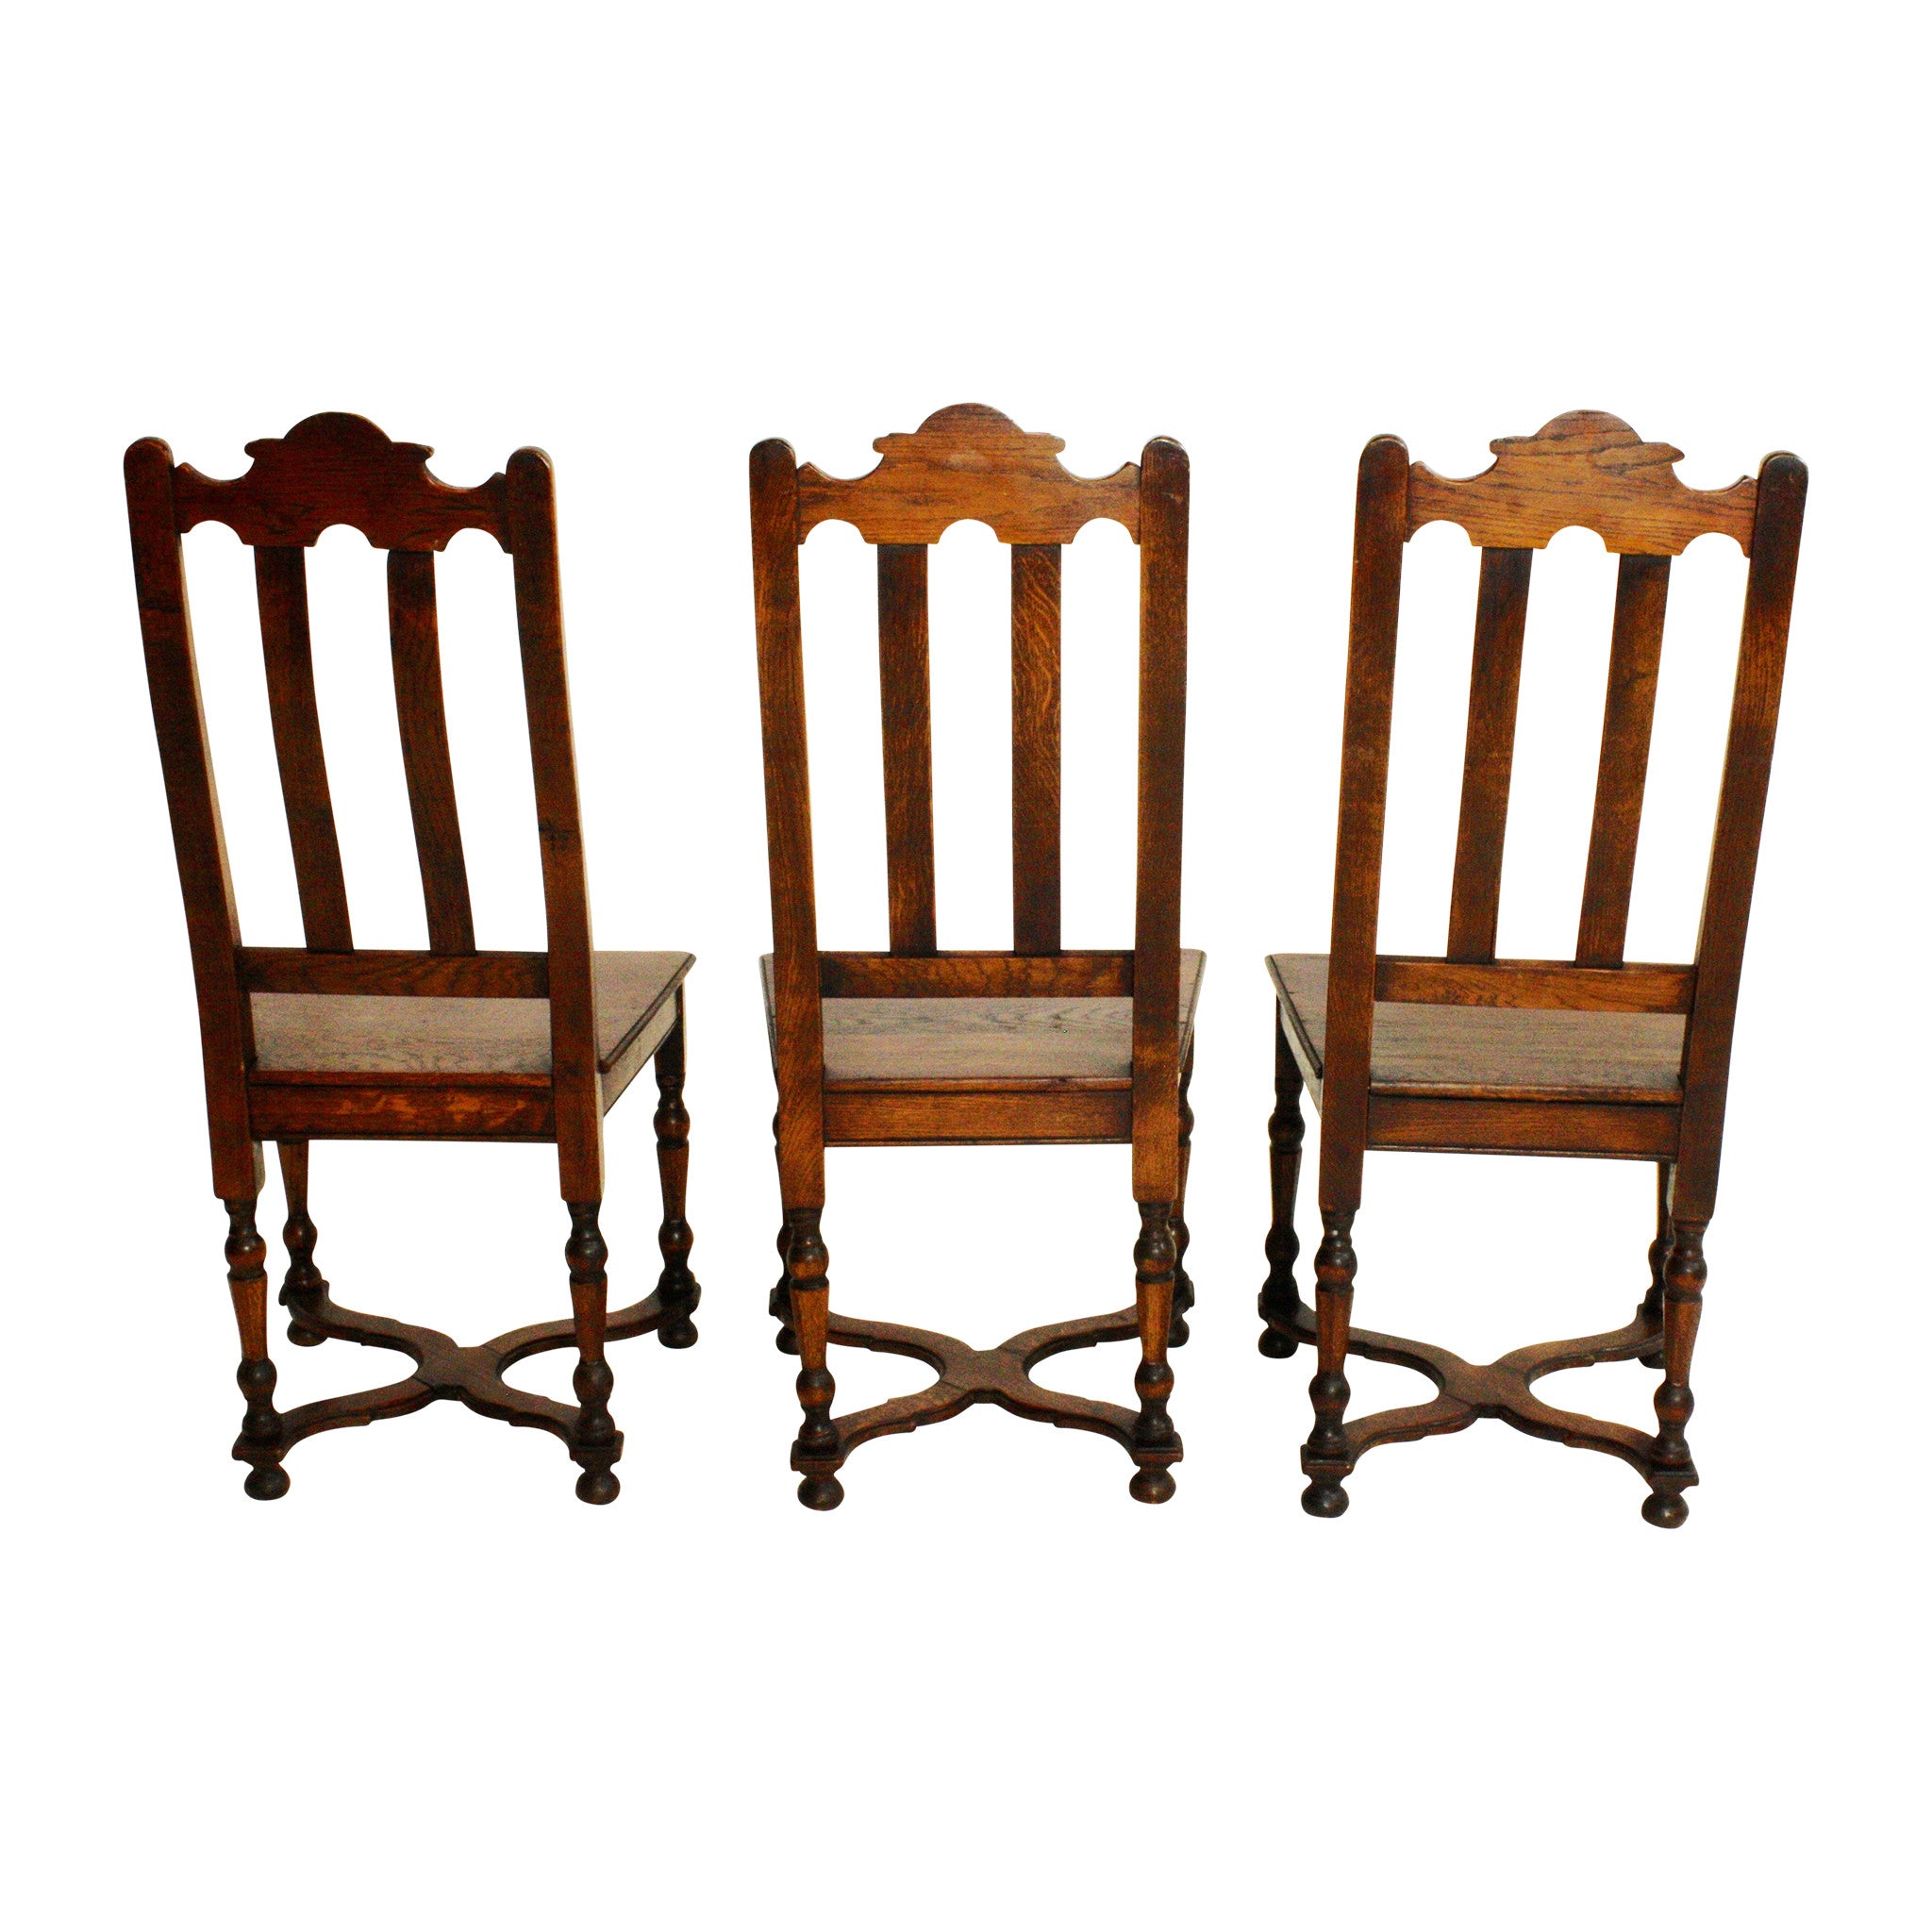 ski-country-antiques - Dutch Chairs